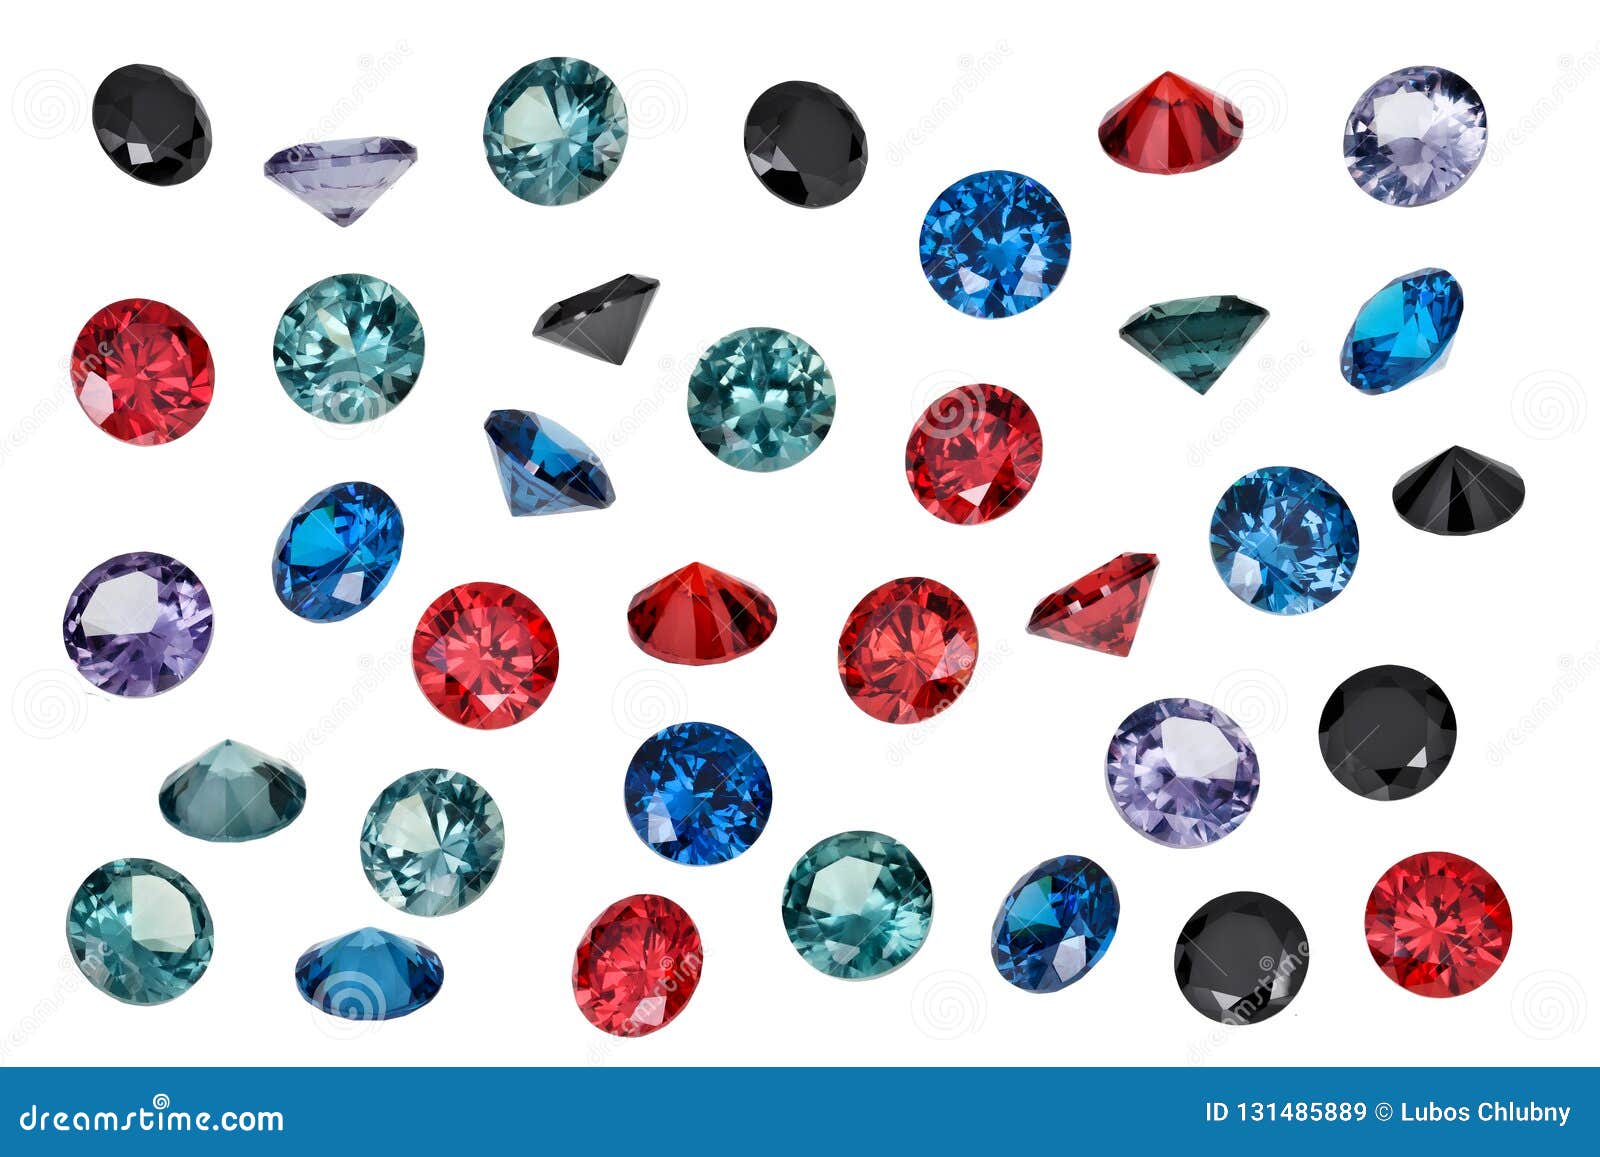 luxury jewelry gems, set of colored gemstones